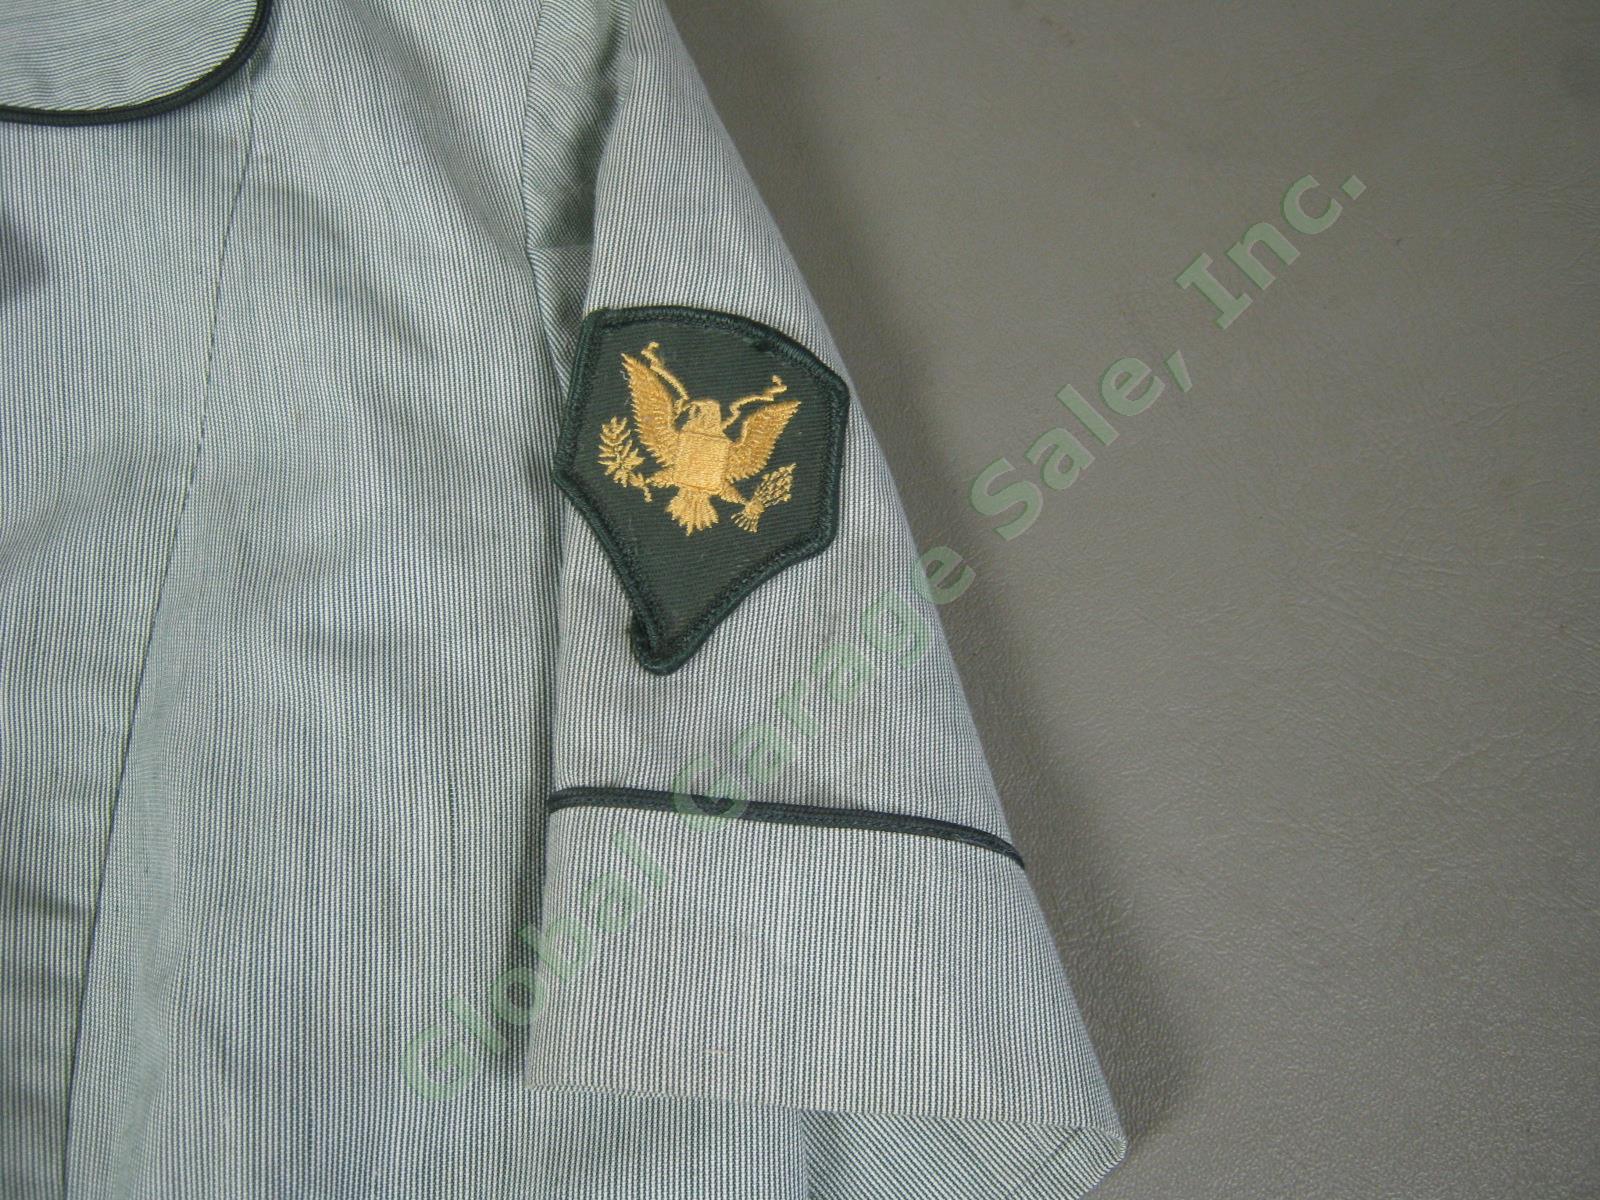 Vtg Womens Army Corps WAC Uniform Lot Green Cord Skirt Jacket Cap AG-344 Dress 9